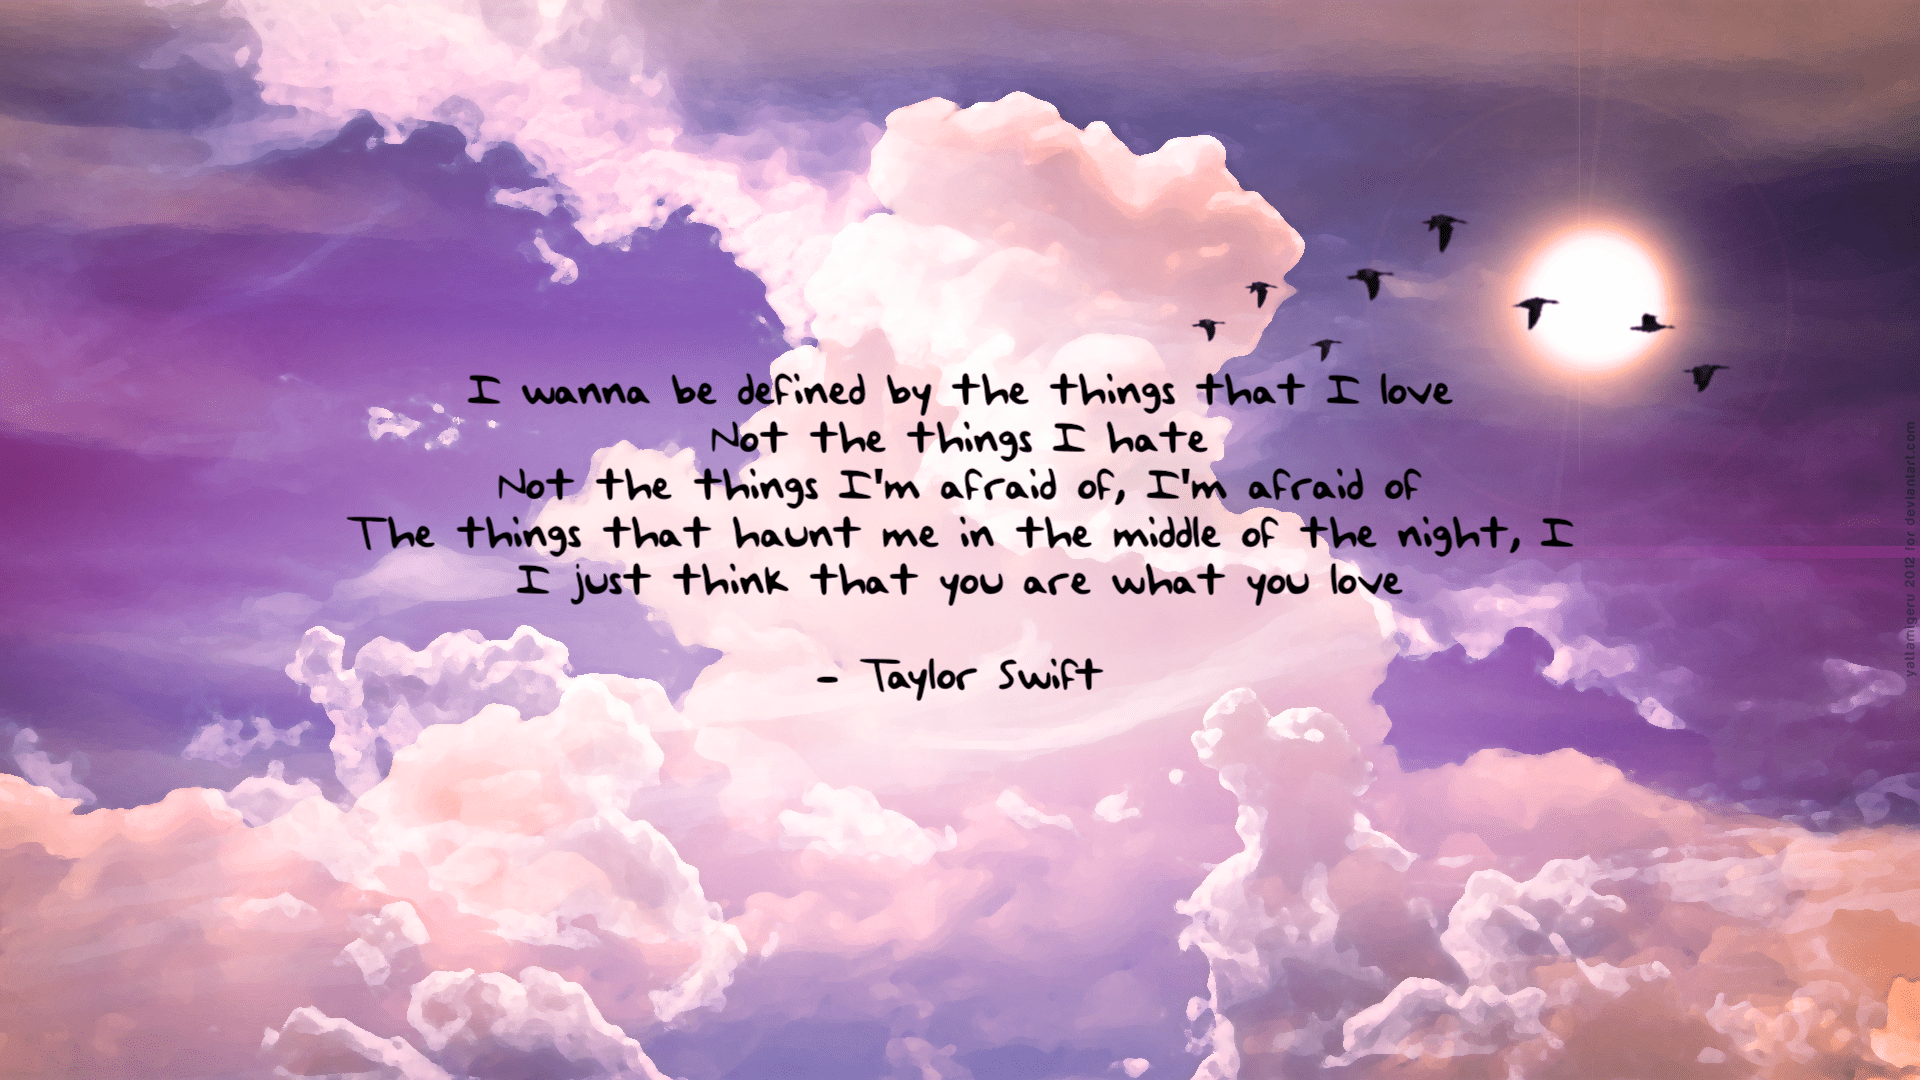 Taylor Swift Lyrics Laptop Wallpaper Free Taylor Swift Lyrics Laptop Background